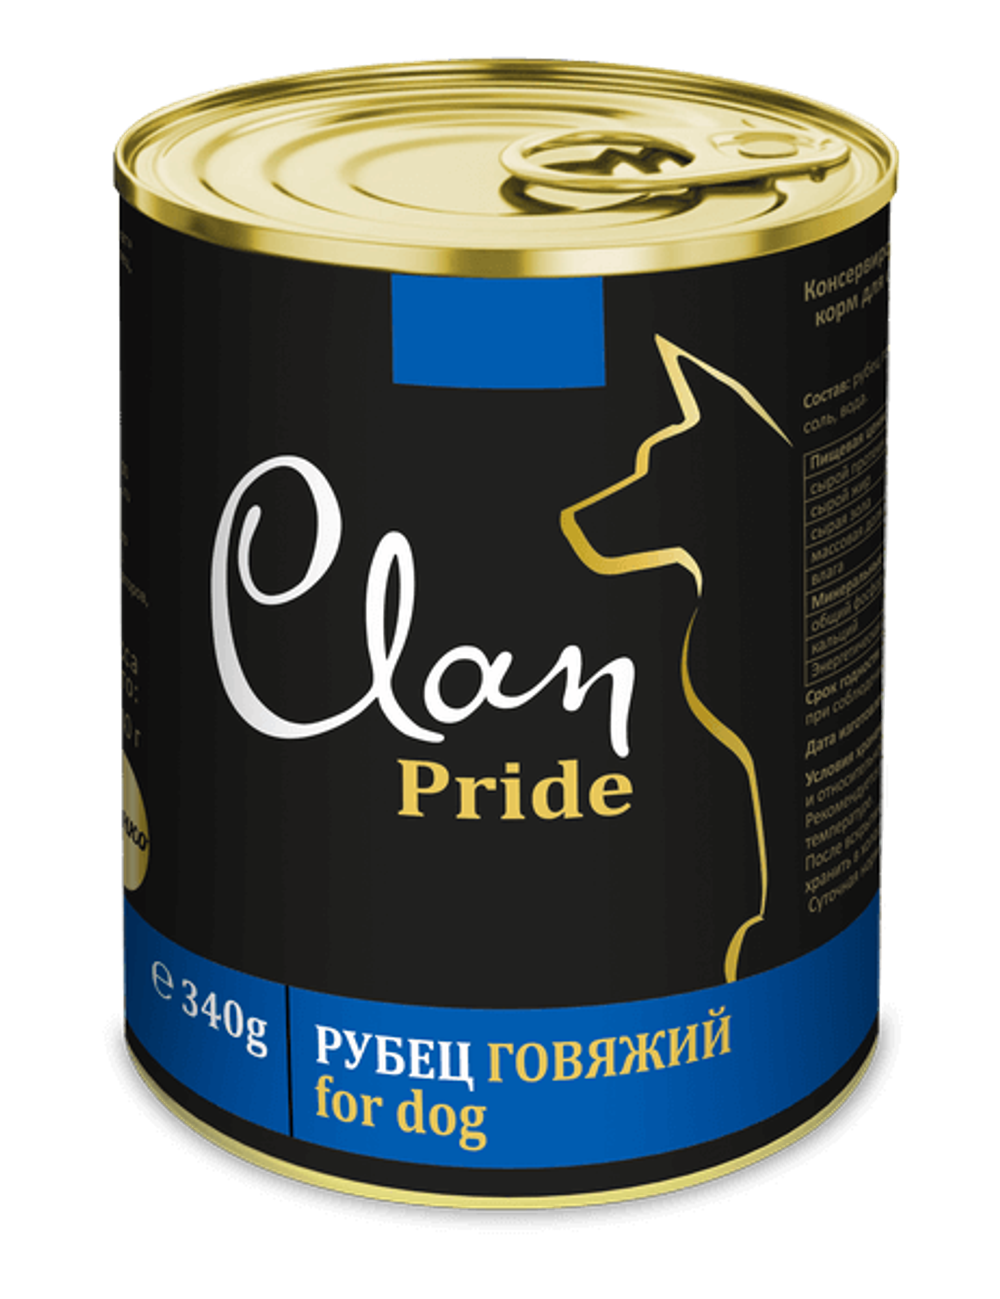 Clan Pride консервы для собак (рубец говяжий) 340 г